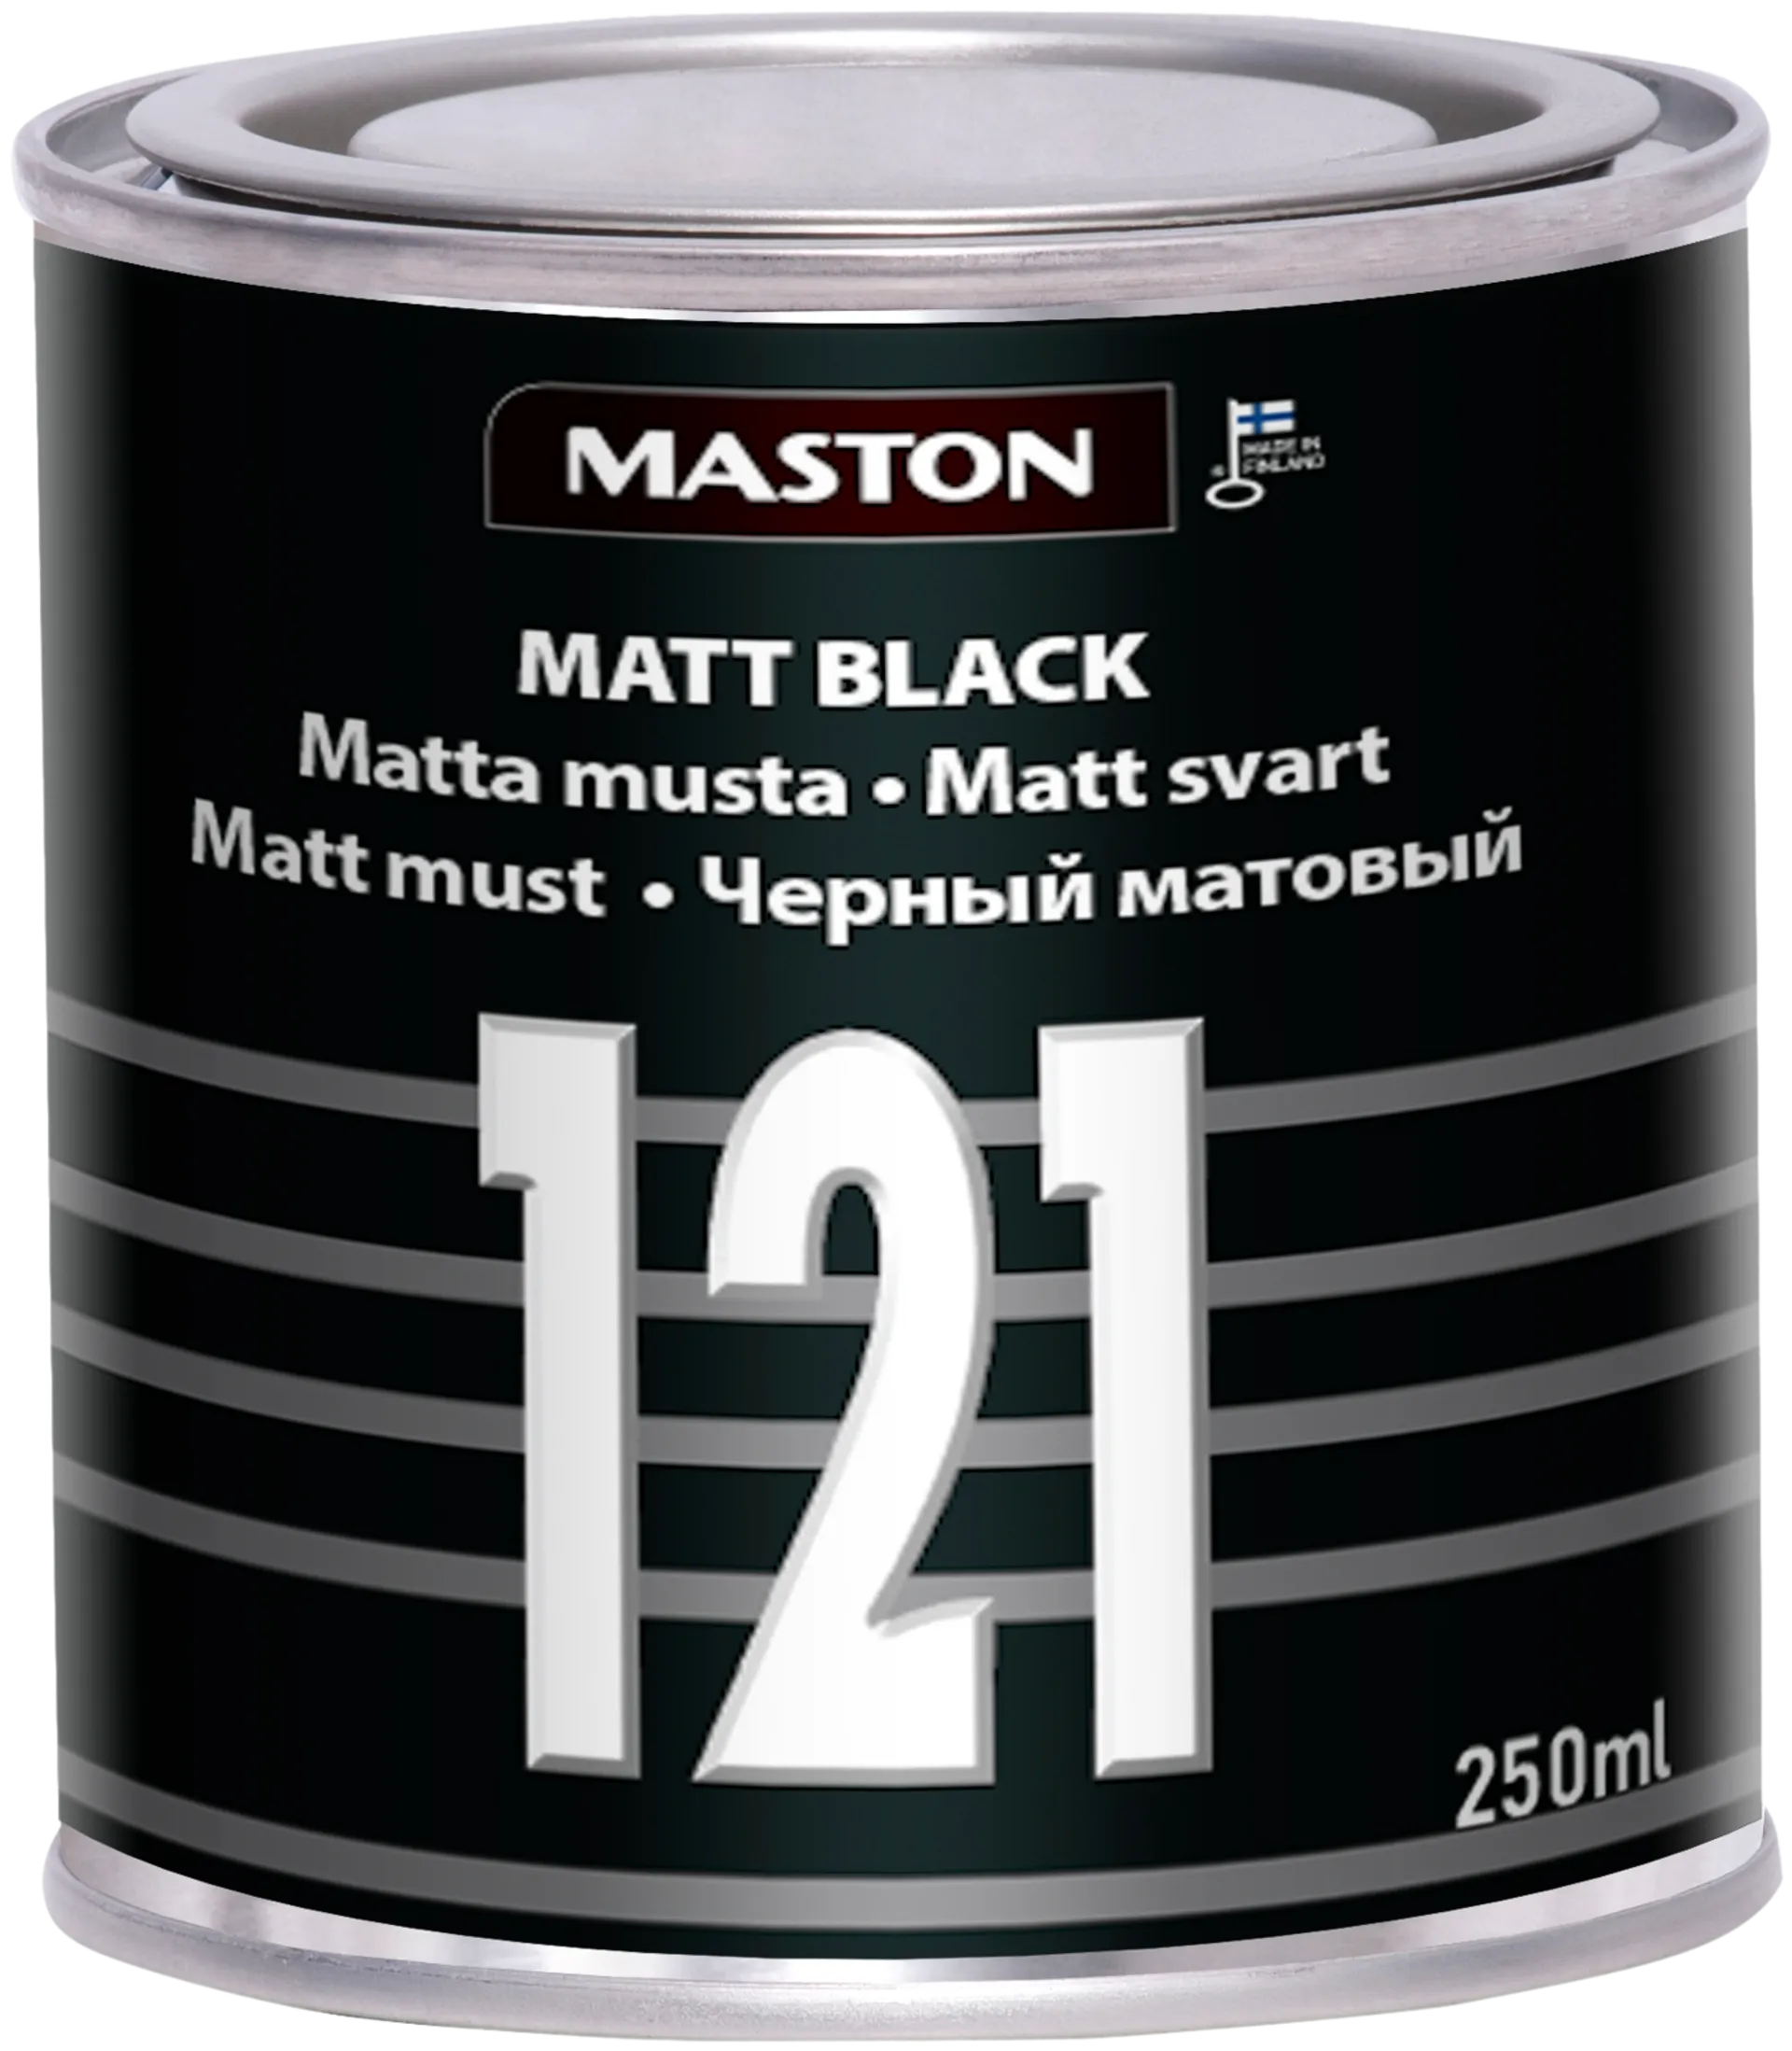 Maston ColorMix matta musta 121 250ml